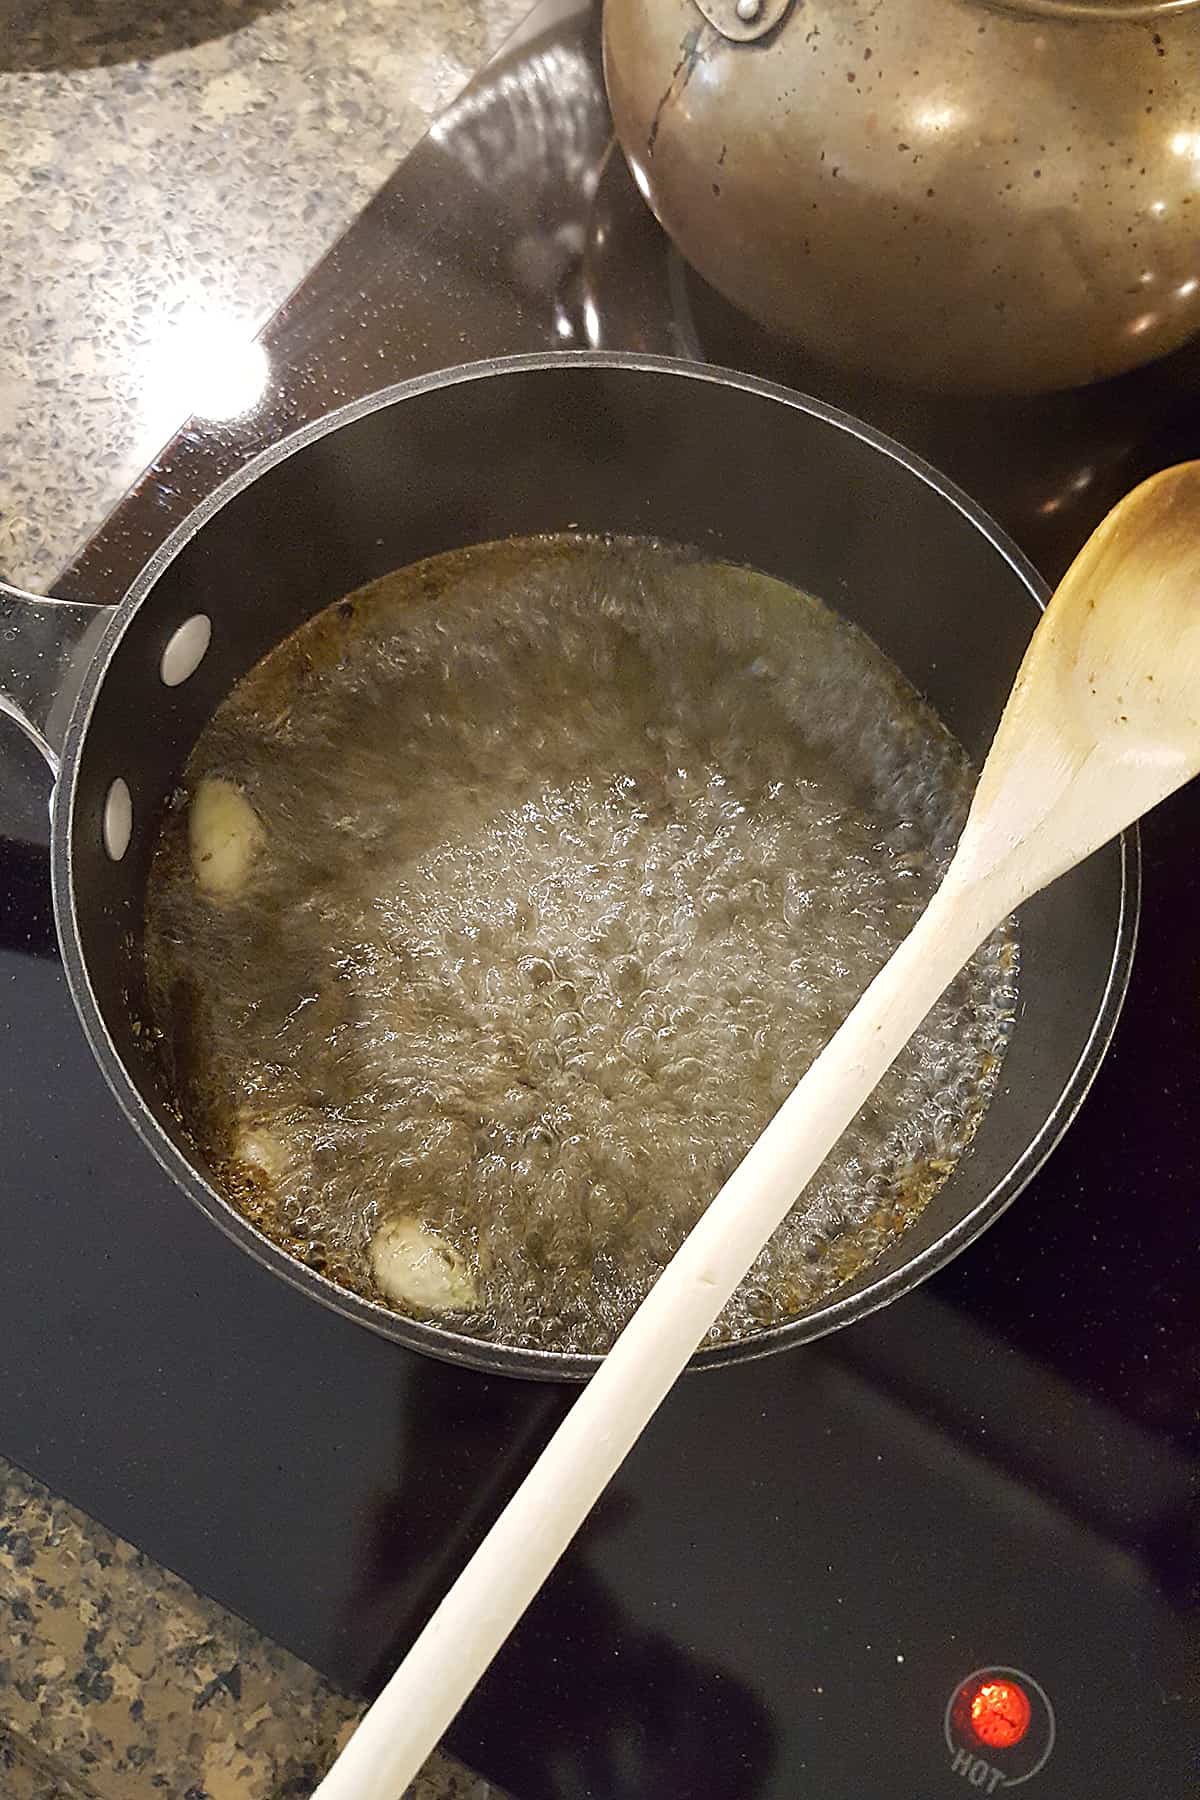 Brine mixture boiling in saucepan on stovetop.